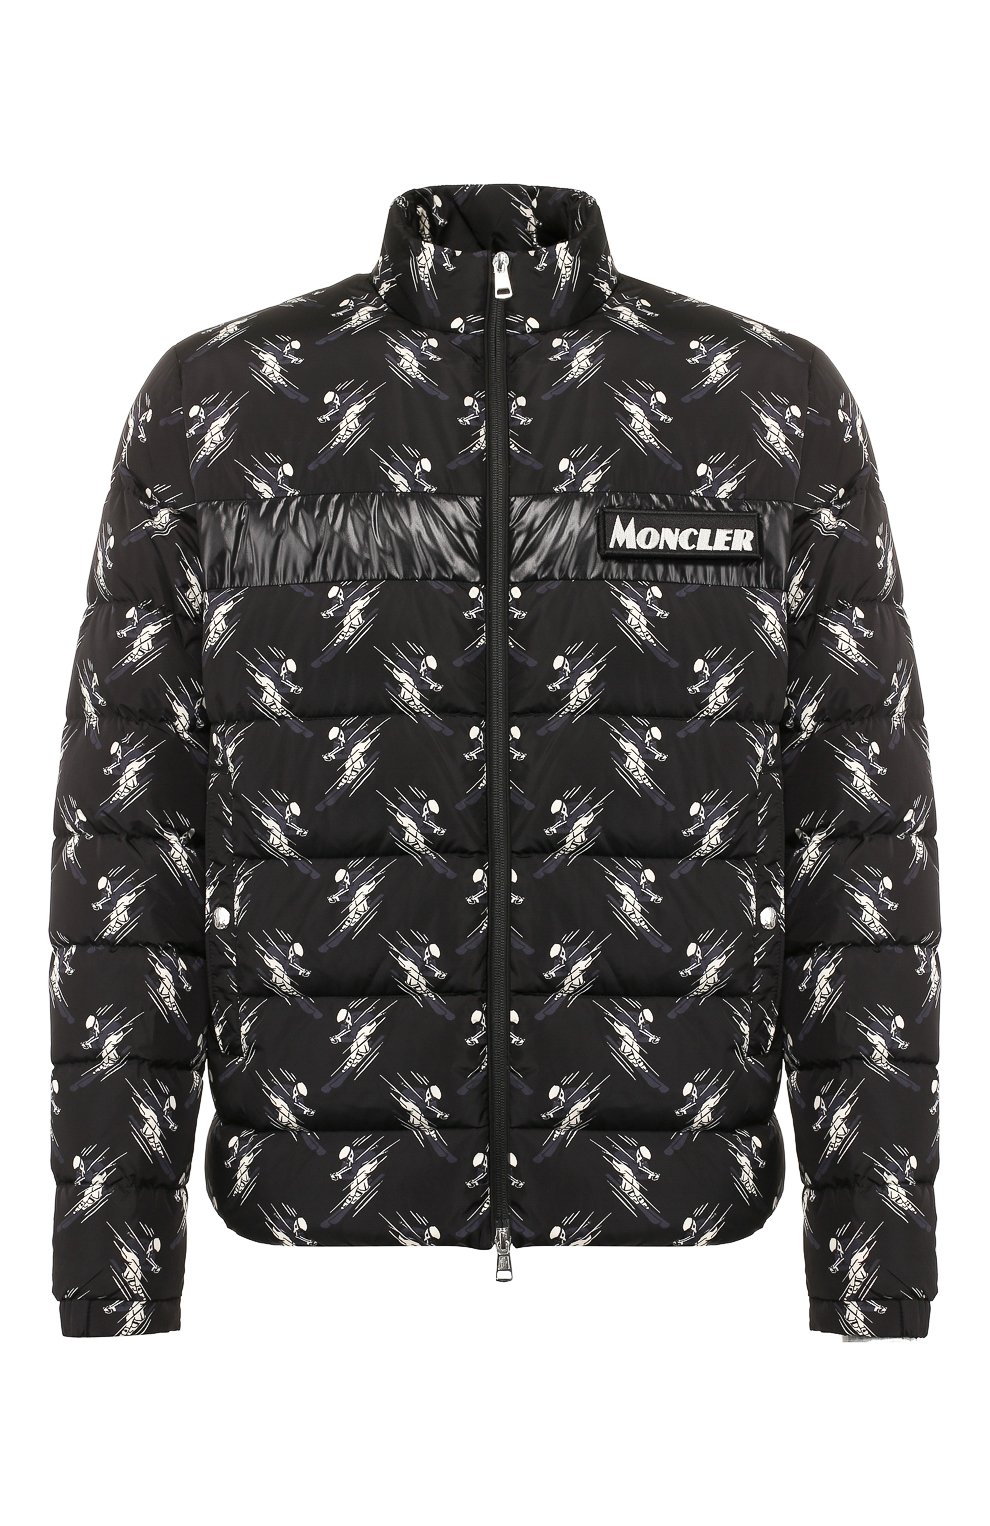 Мужская черная пуховая куртка servieres MONCLER — купить за 86800 руб